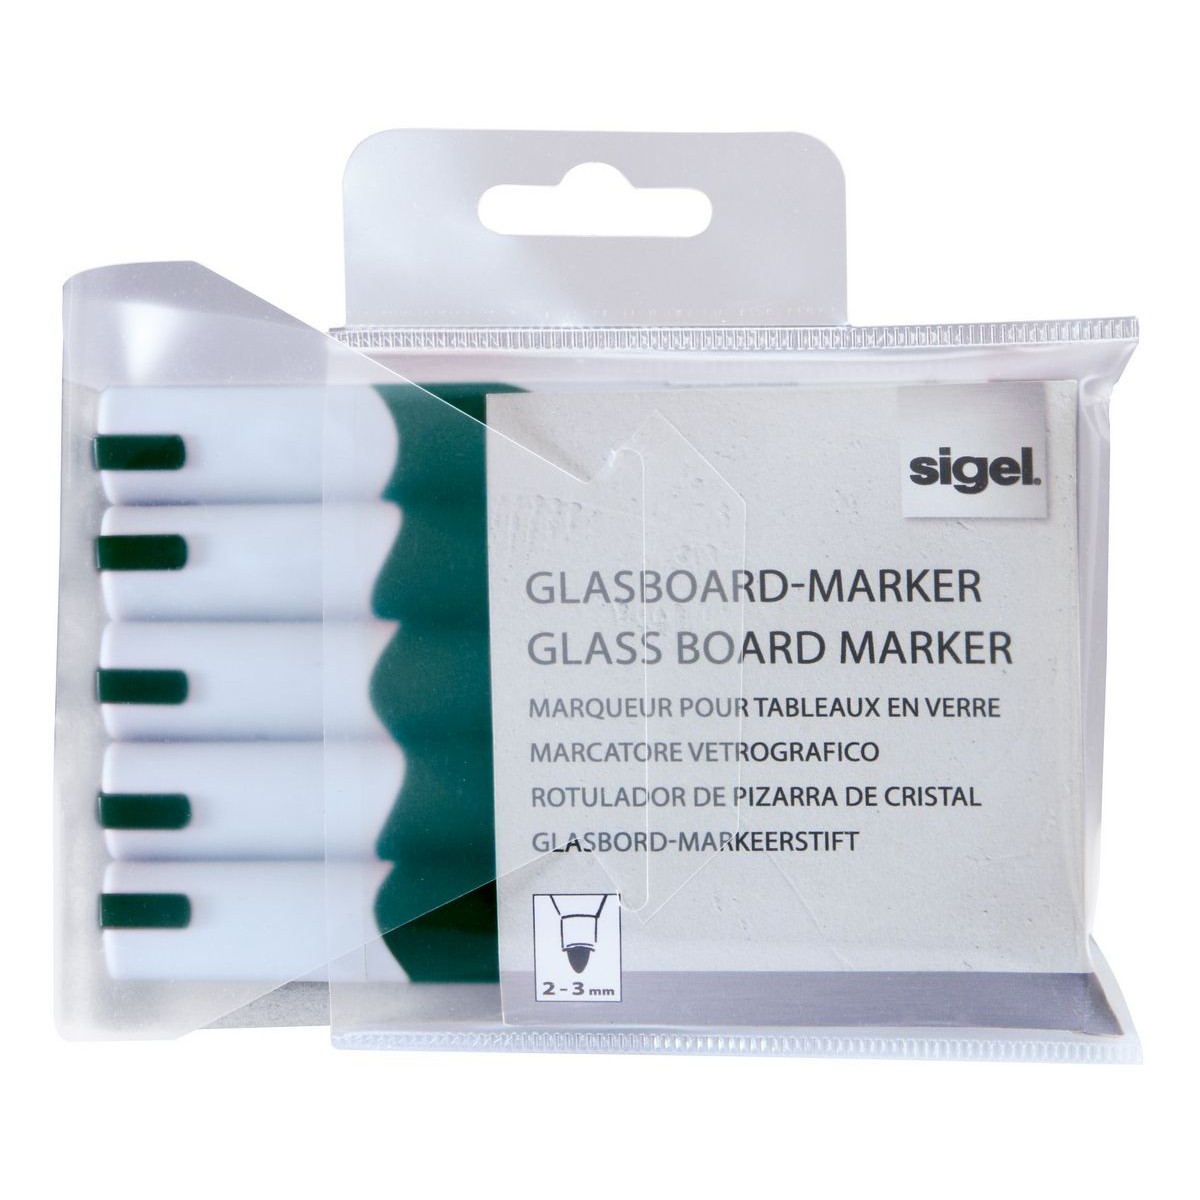 GL714 - Sigel - Marcatore per lavagne di vetro, punta tonda 2-3 mm - Verde